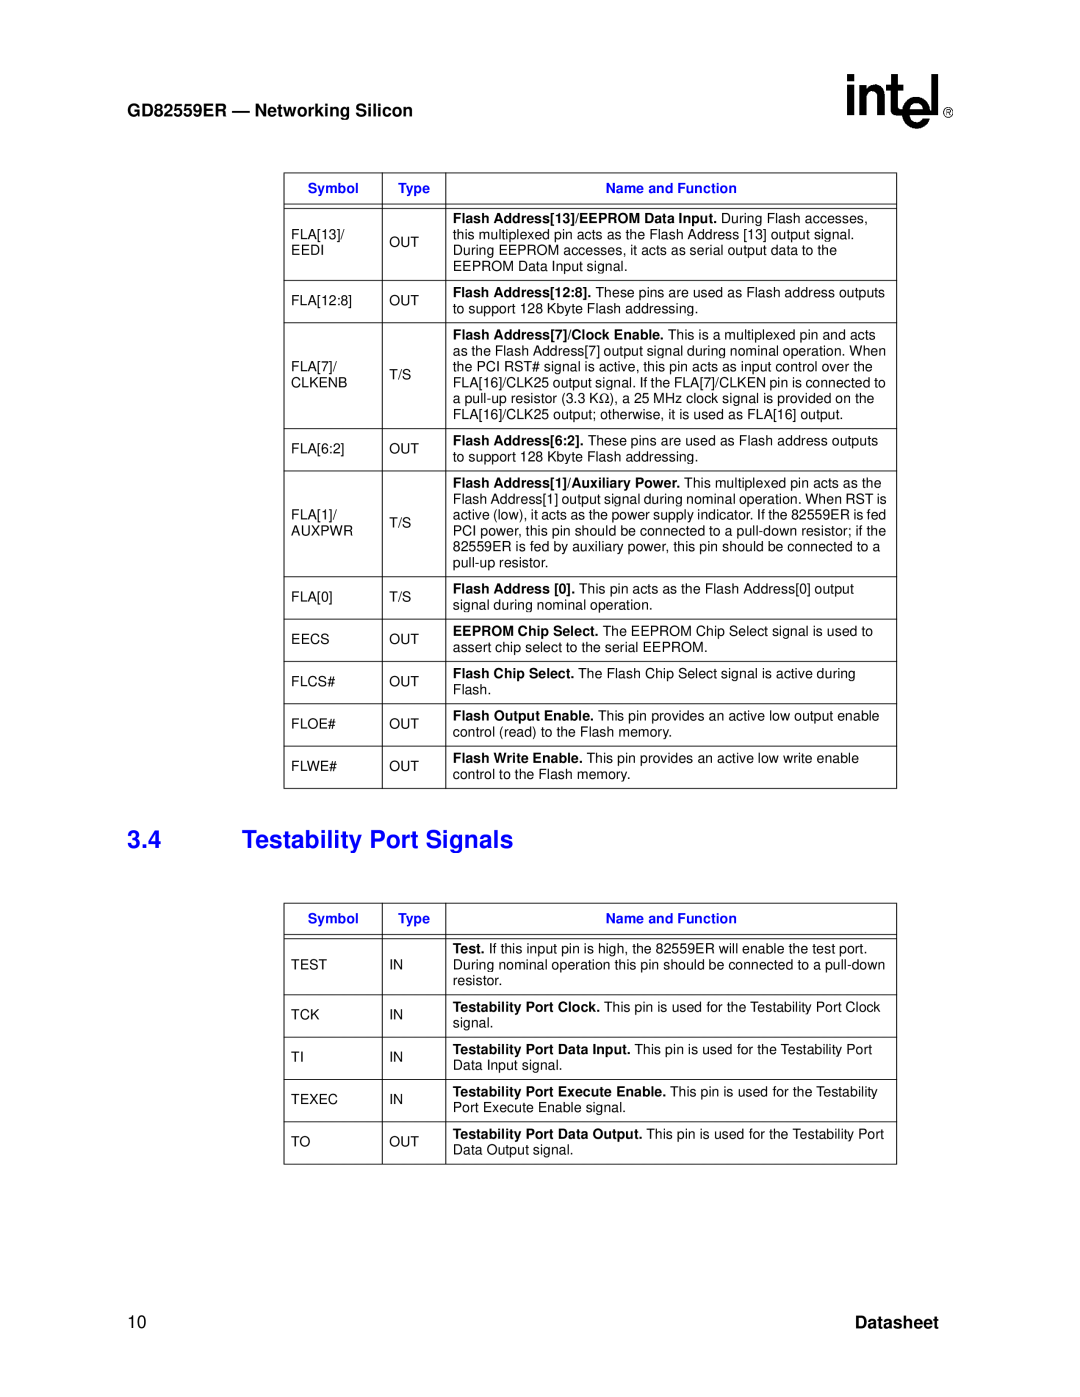 Intel manual Testability Port Signals, GD82559ER - Networkin g Silicon, Datasheet 